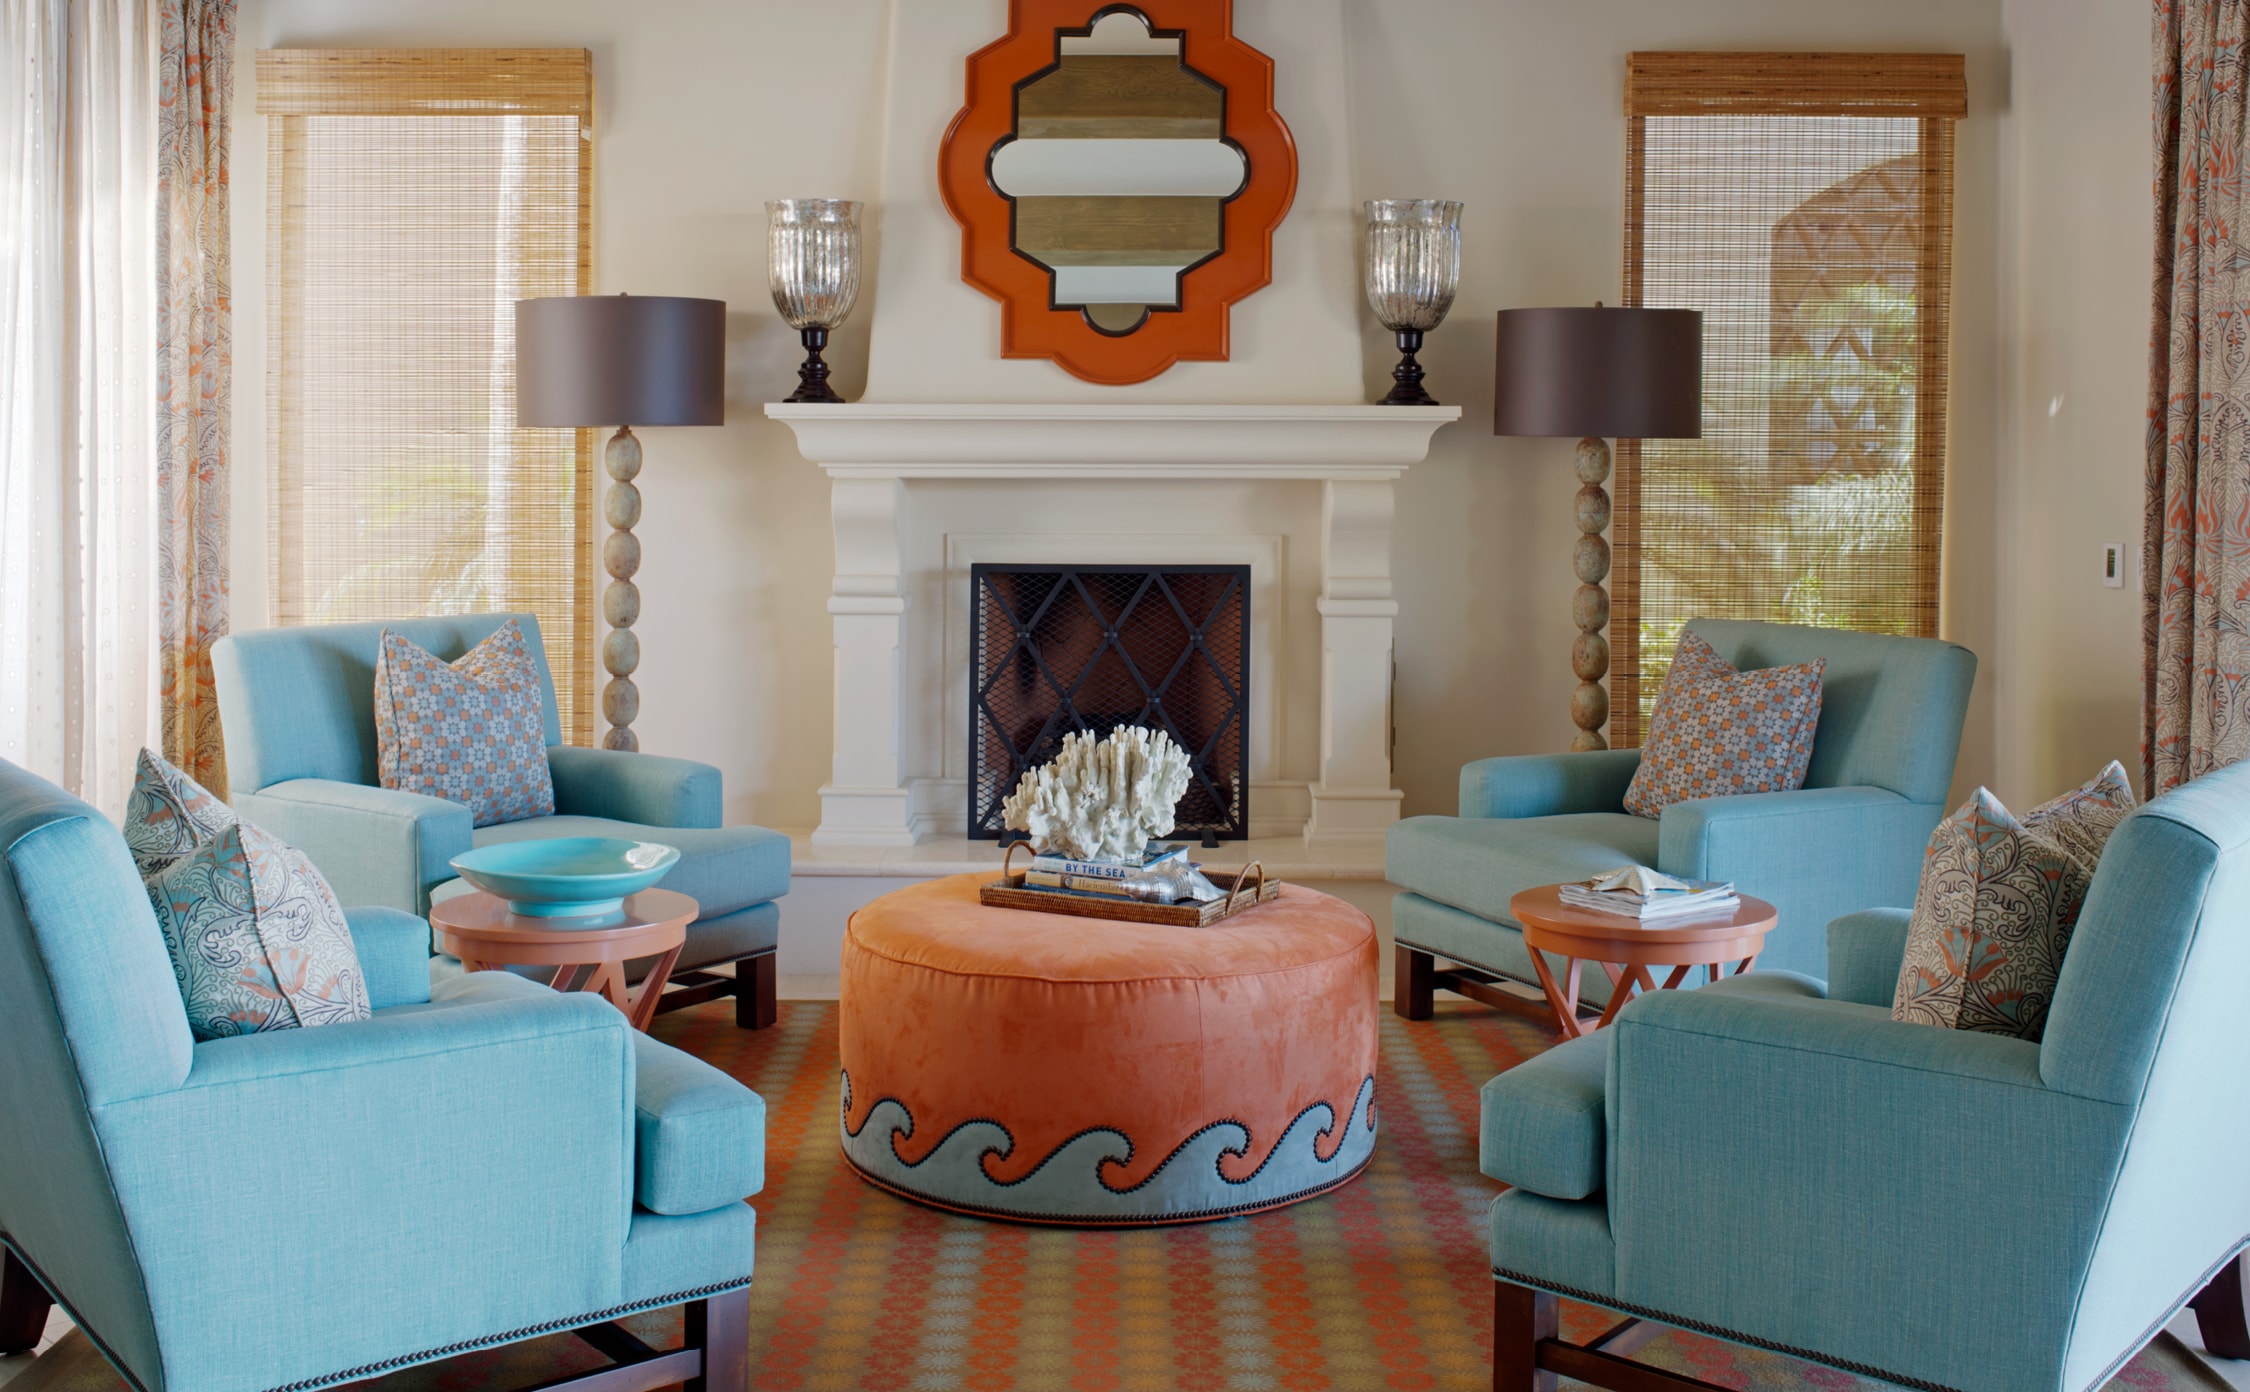 hacienda beach villa design demanded bright living room elements that reflect the vibrancy of the mexican coast